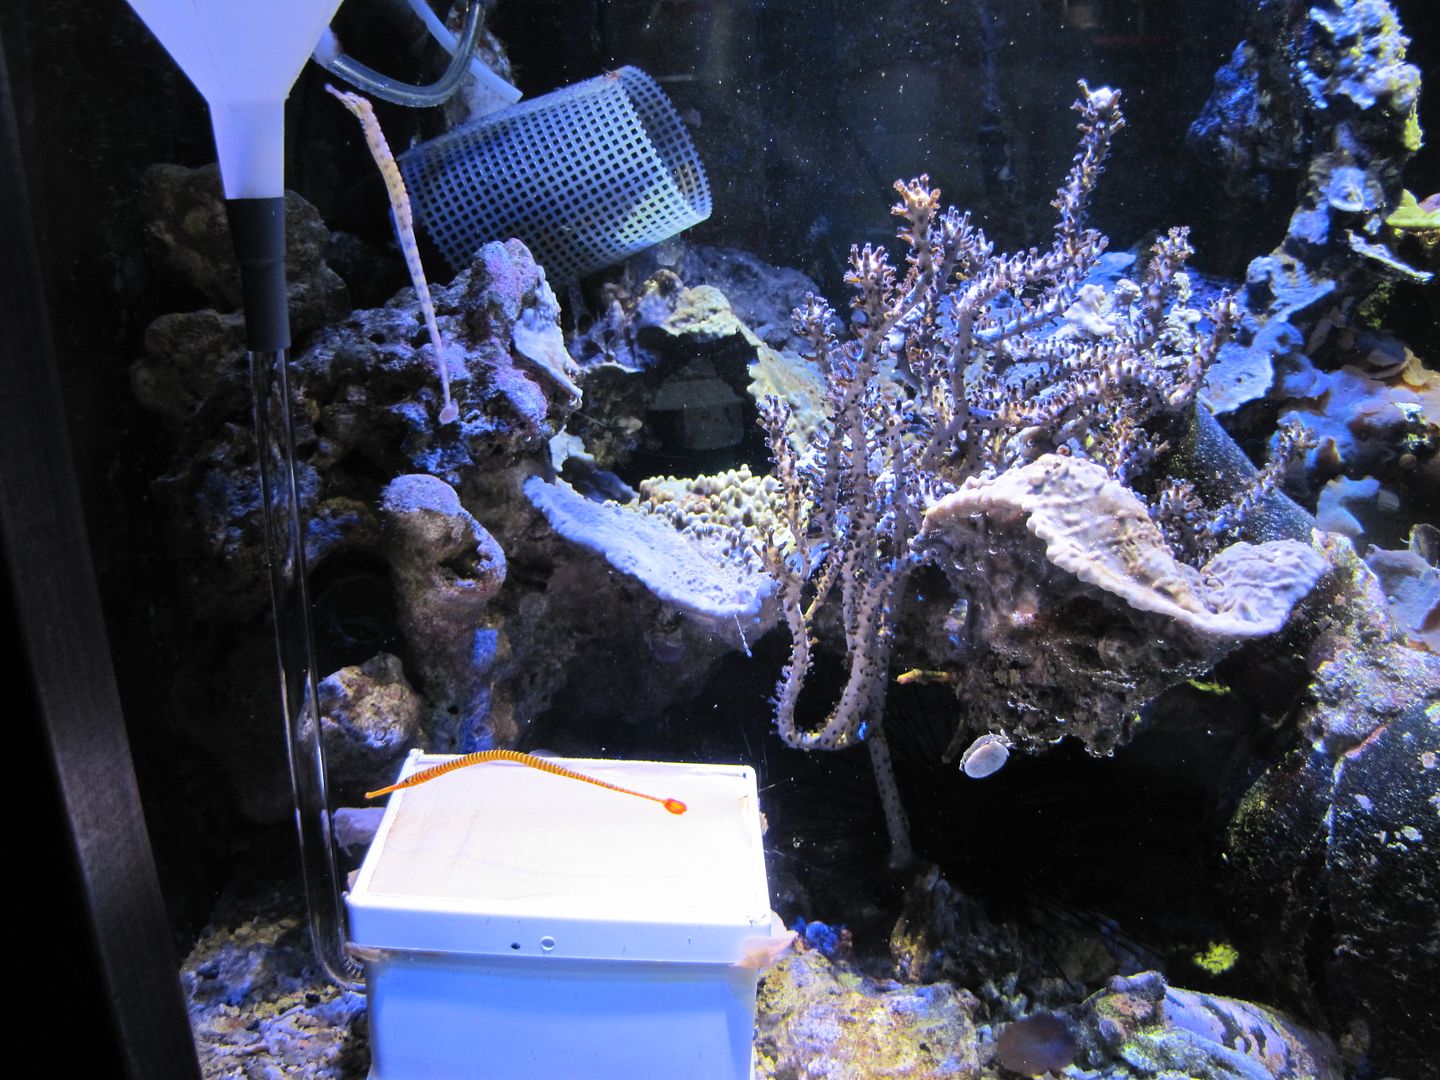 Auto brine shrimp hatchery and feeder - The Reef Tank